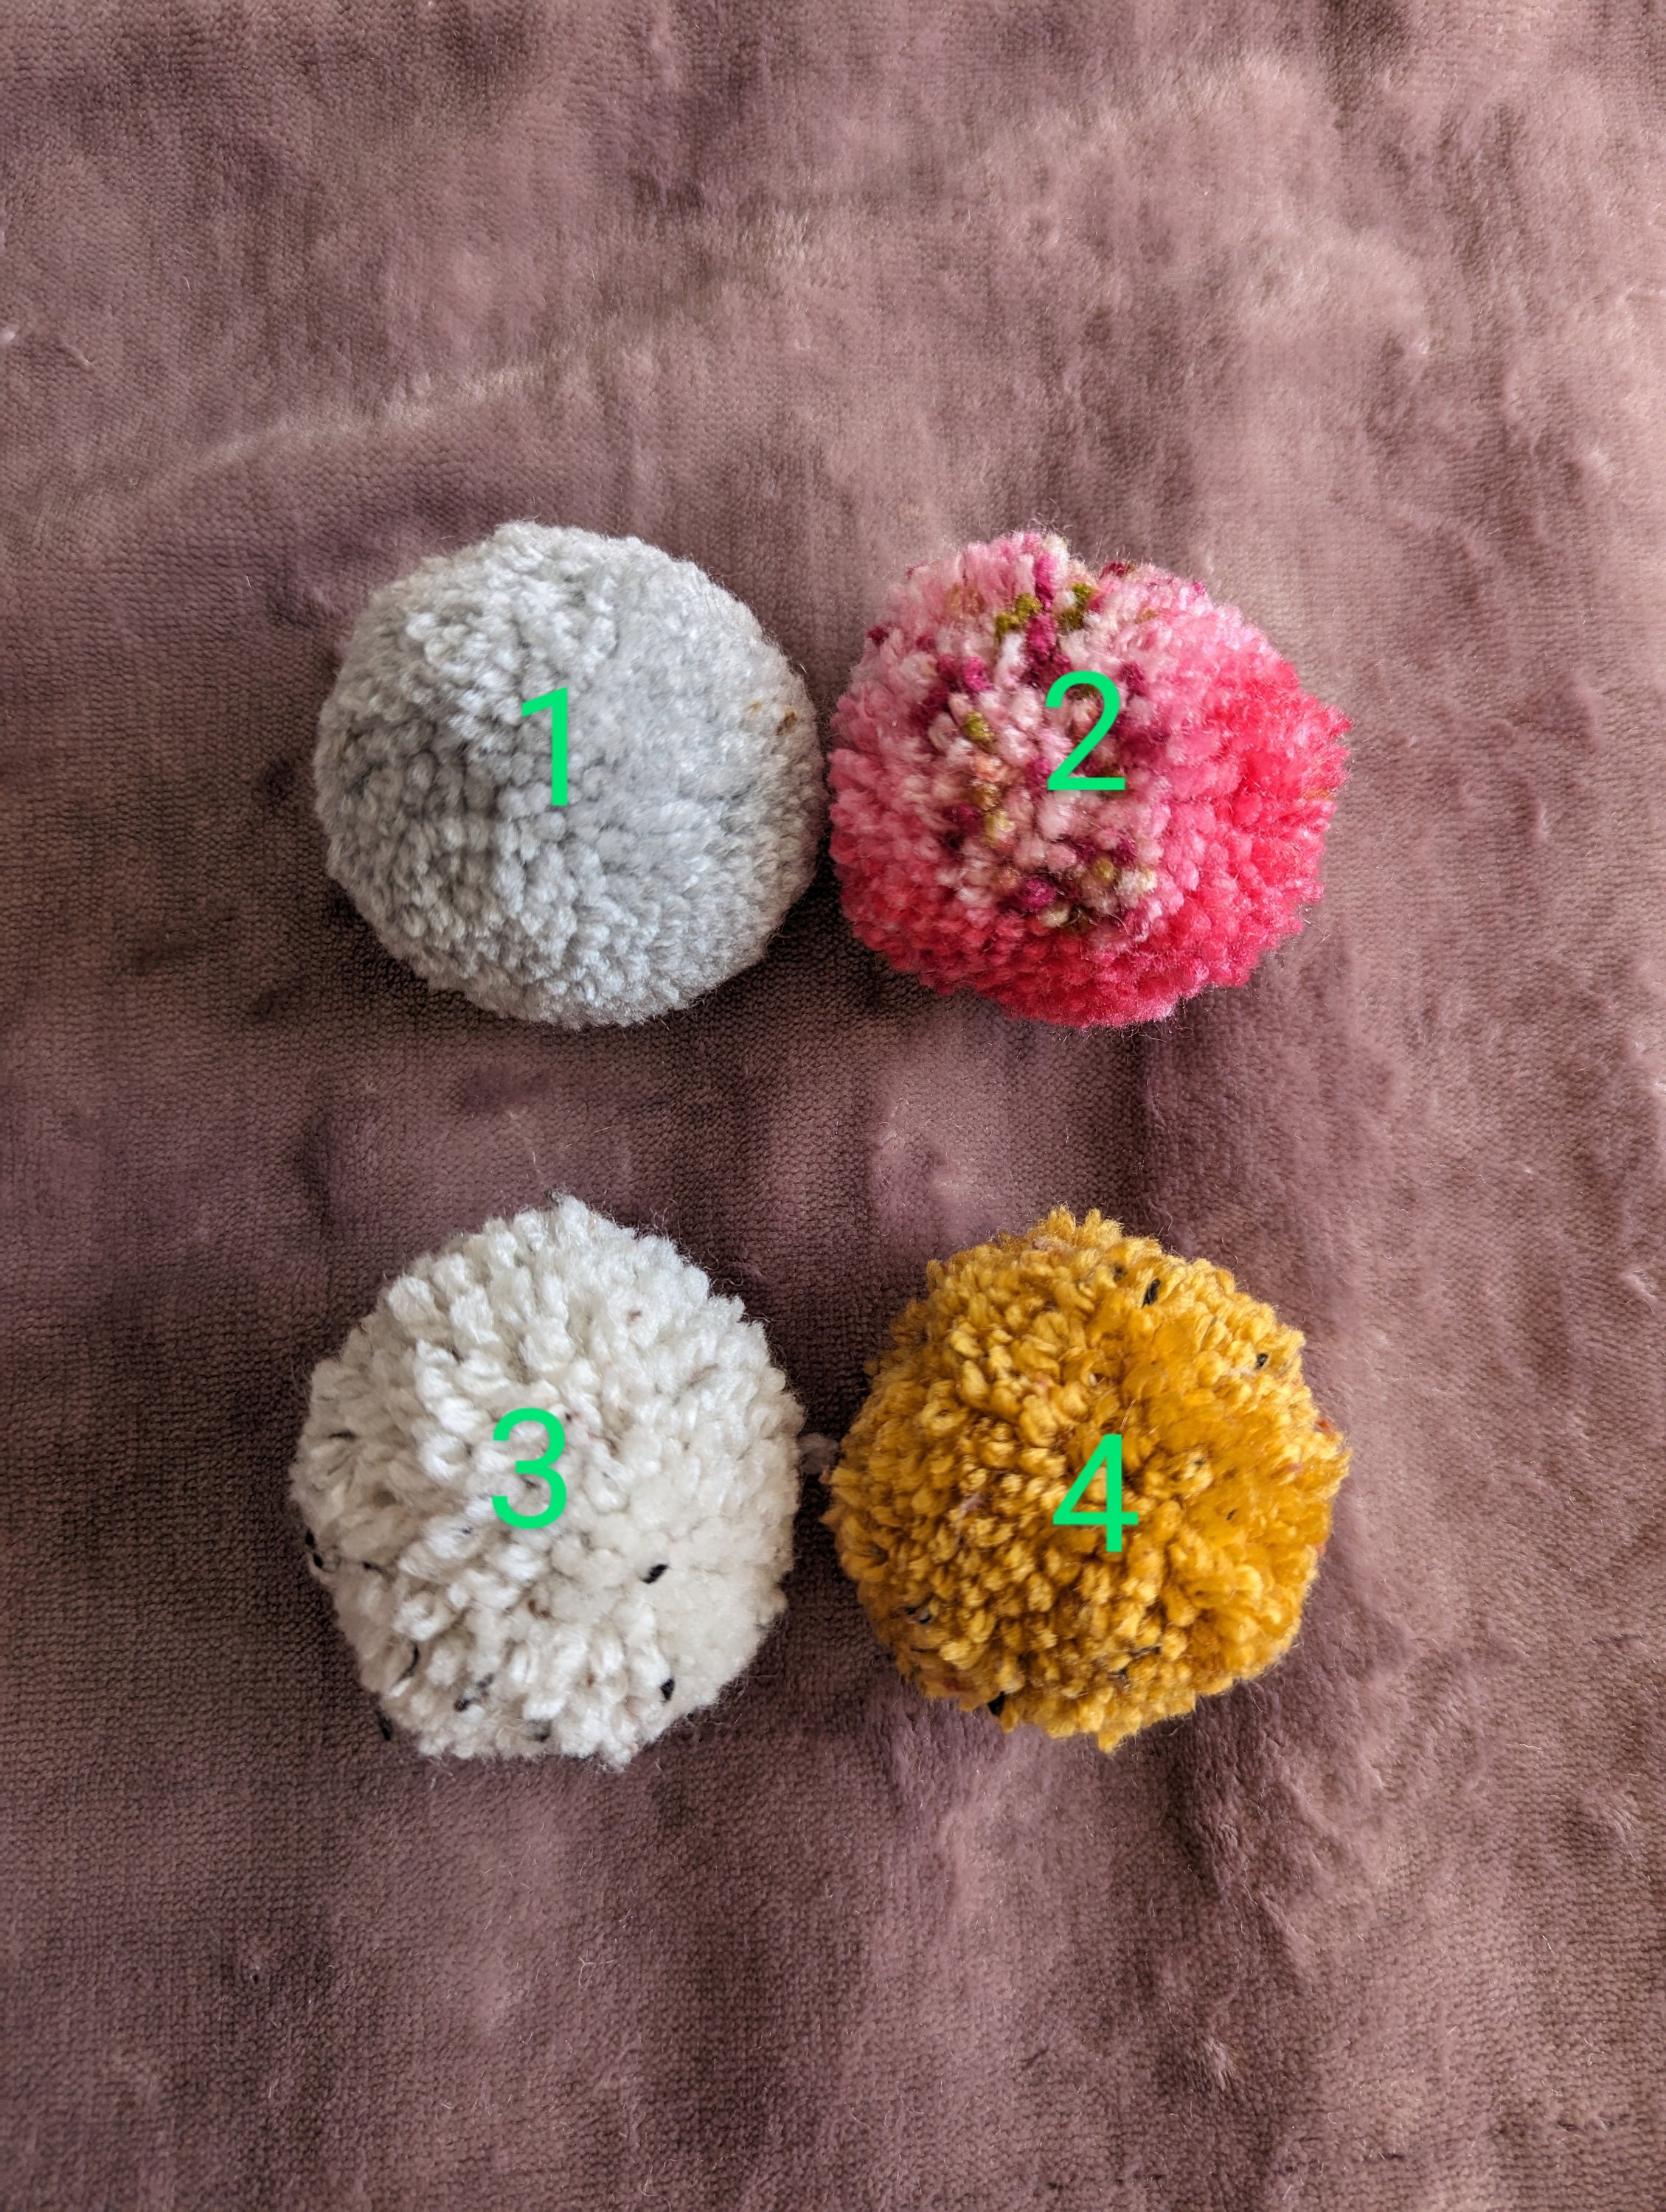 How to Make Multi-Colored Pom Poms